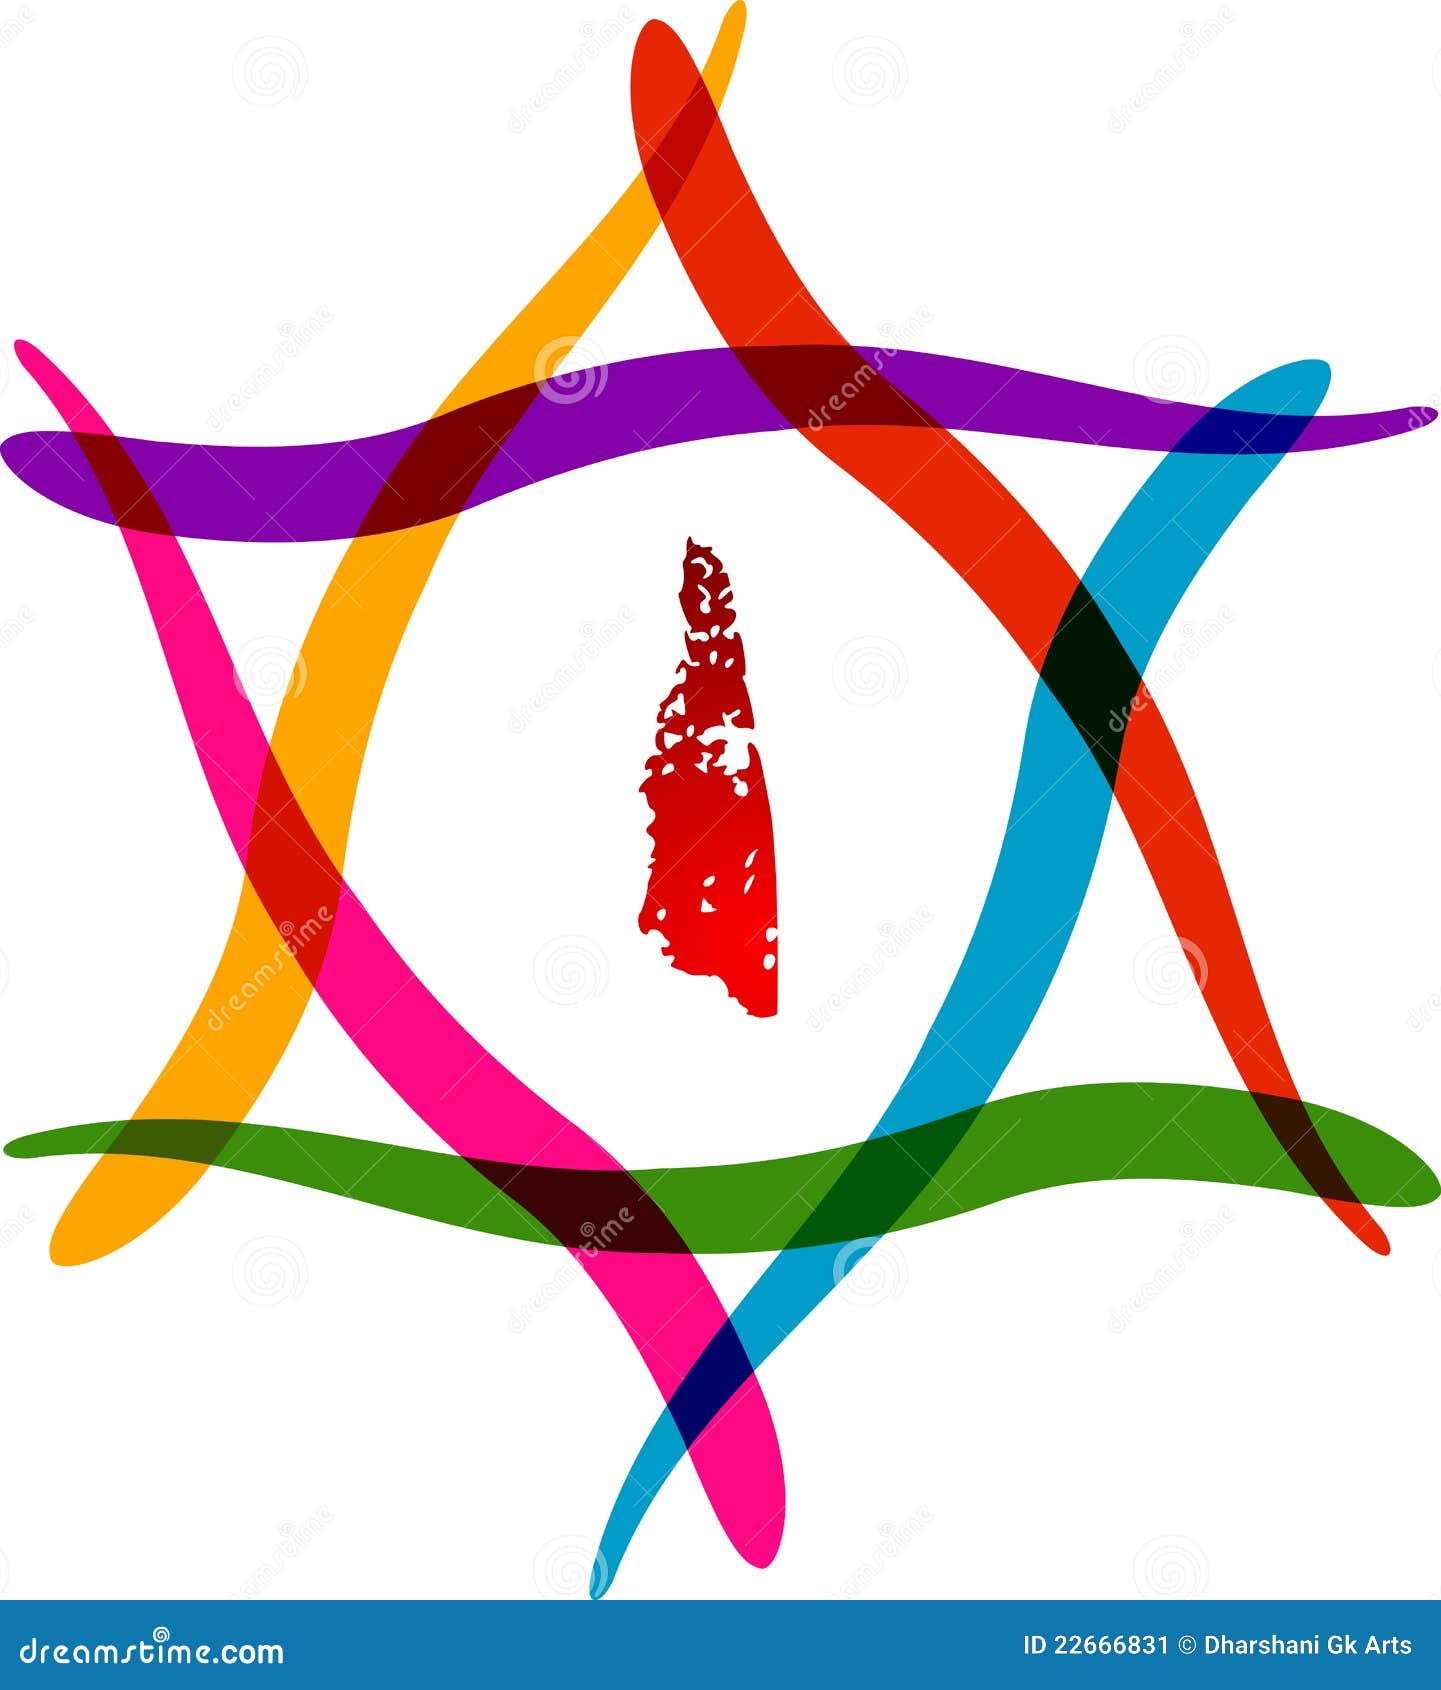 hexagram logo